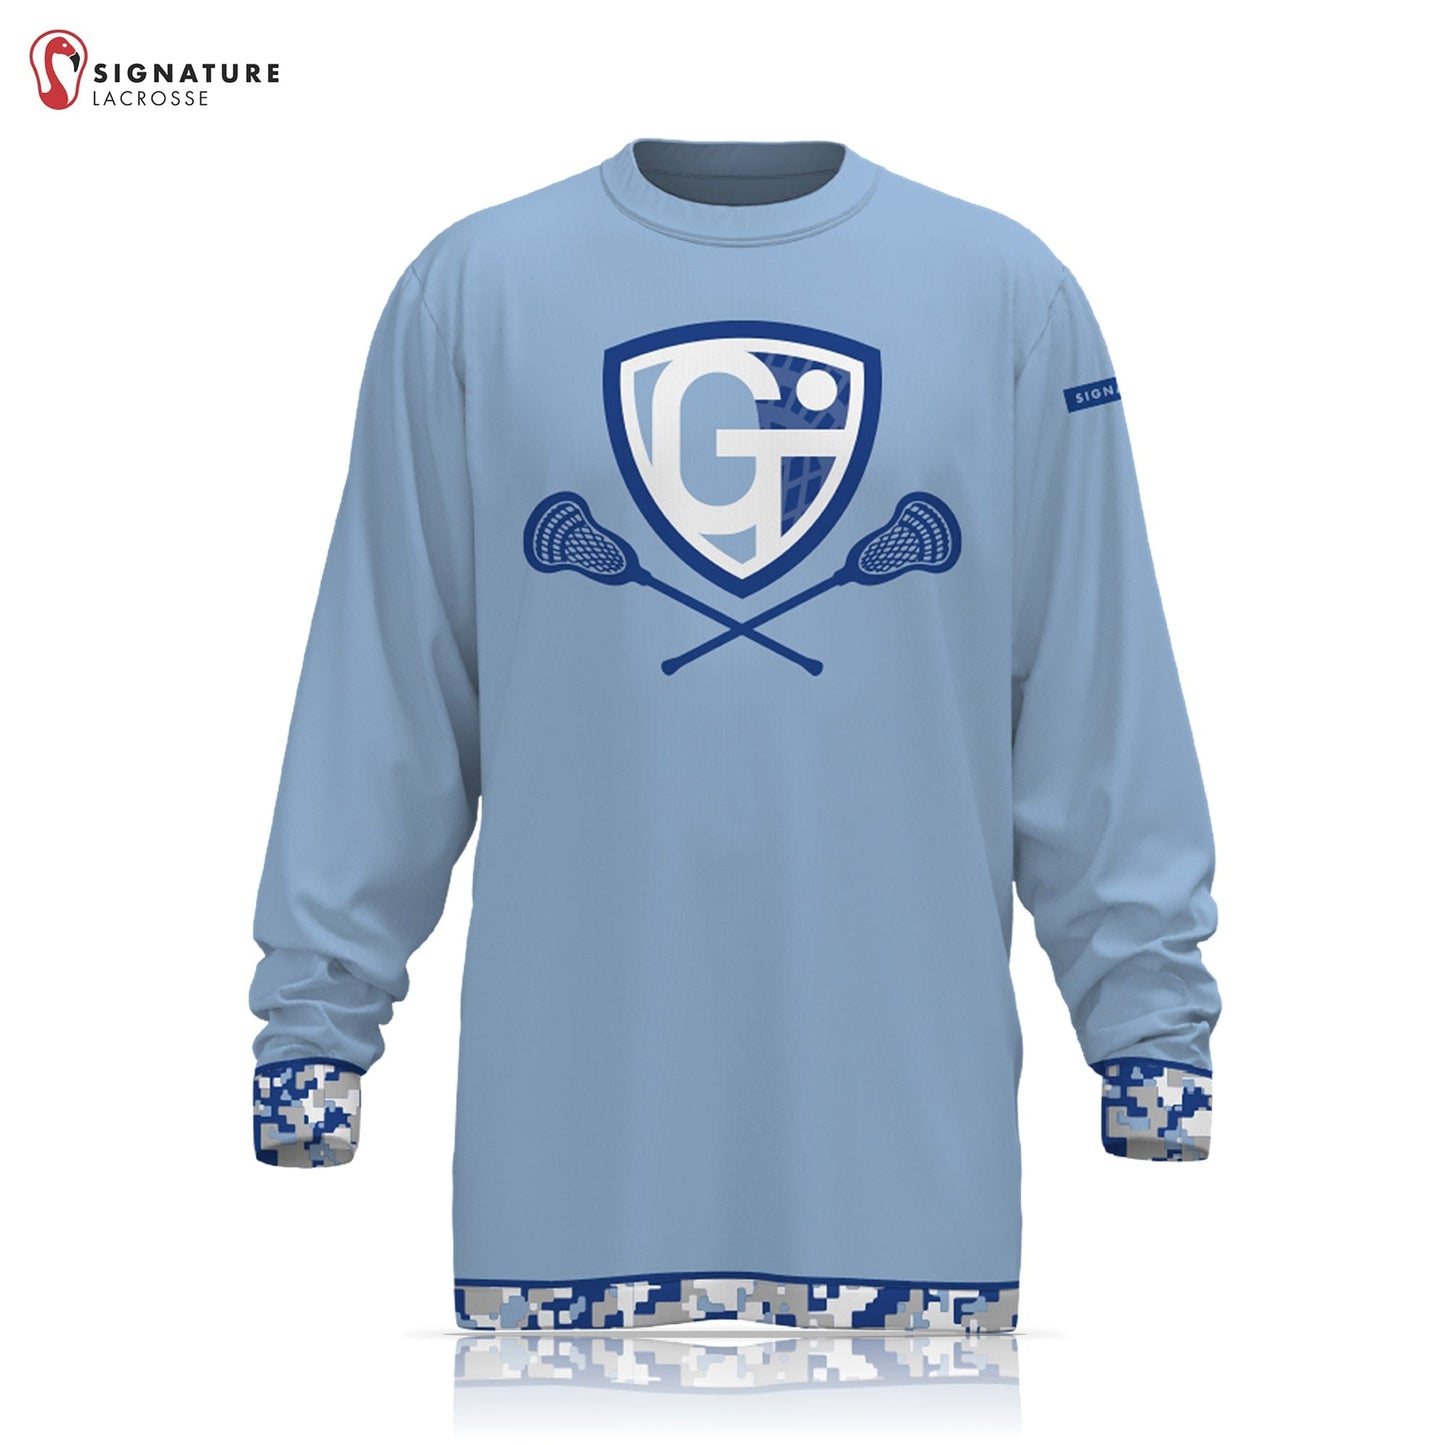 Georgetown Triton Lacrosse Player Long Sleeve Shooting Shirt: 1-2 Signature Lacrosse